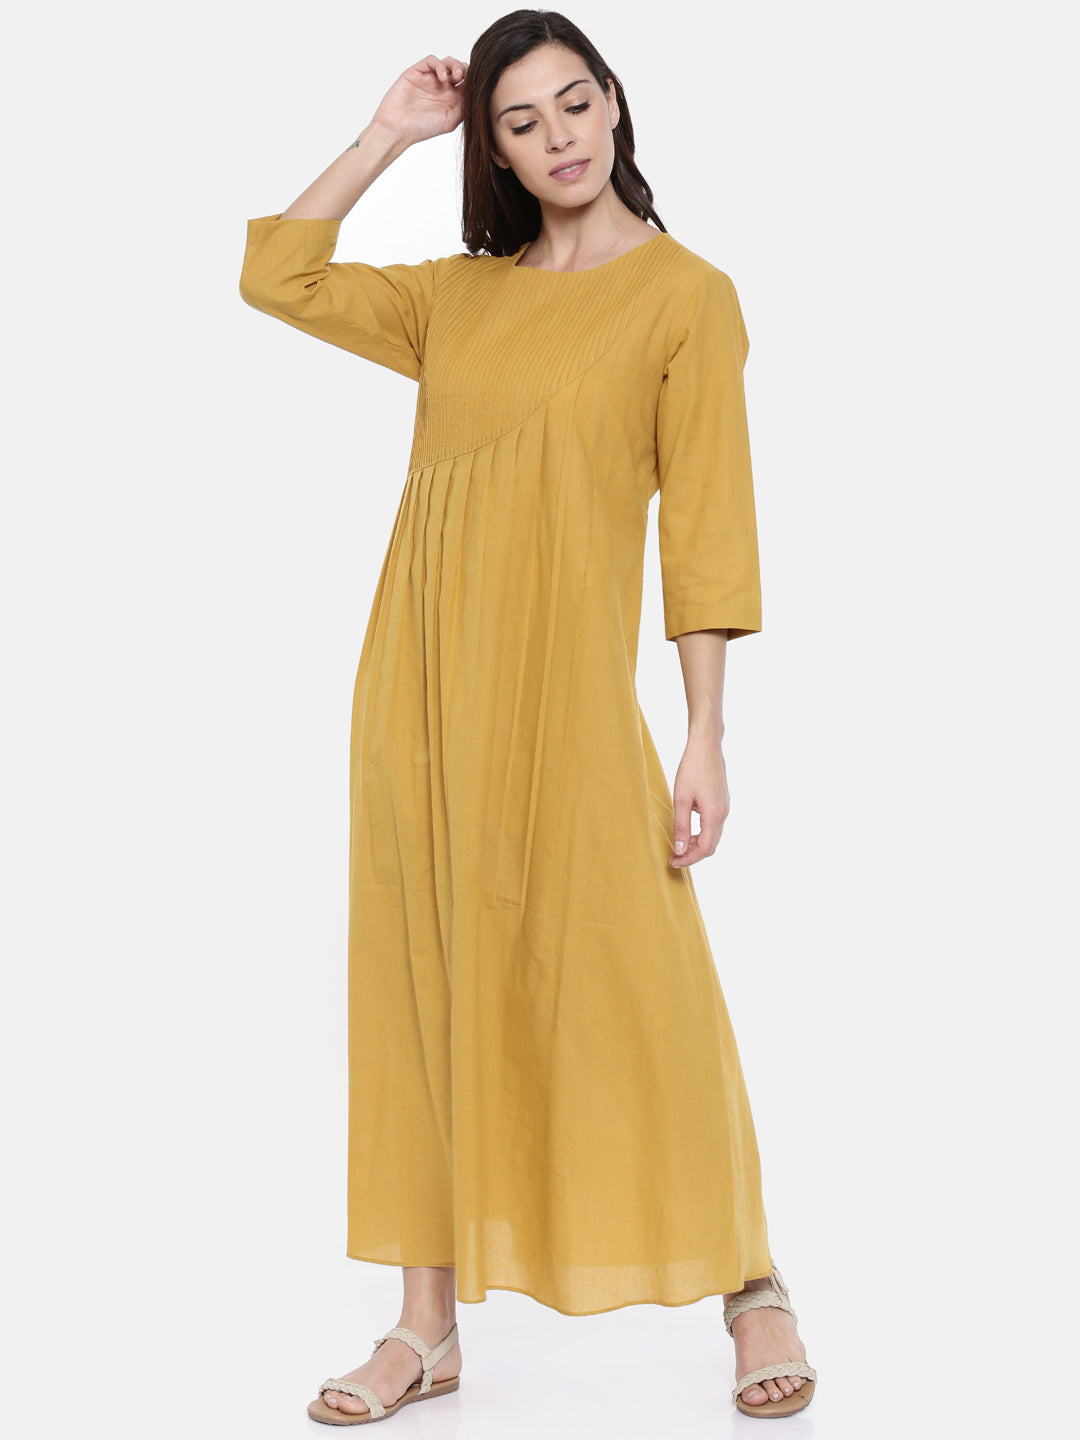 Mutard Pintuck Cotton Dress  - AS0199 - Asmi Shop